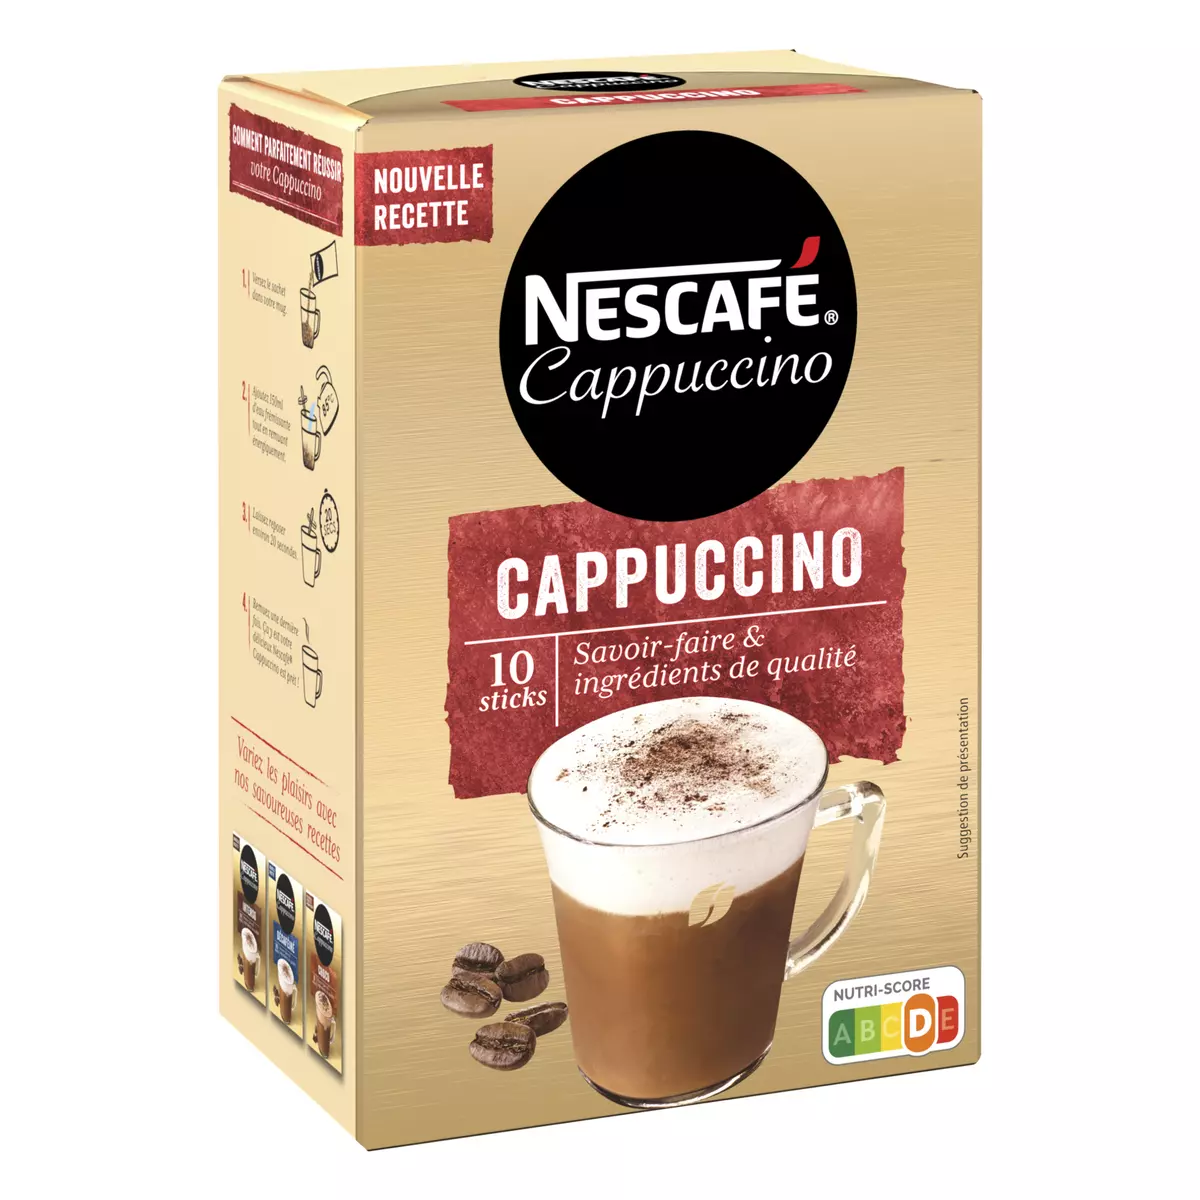 NESCAFE Café soluble en stick cappuccino 10 sticks 140g pas cher 